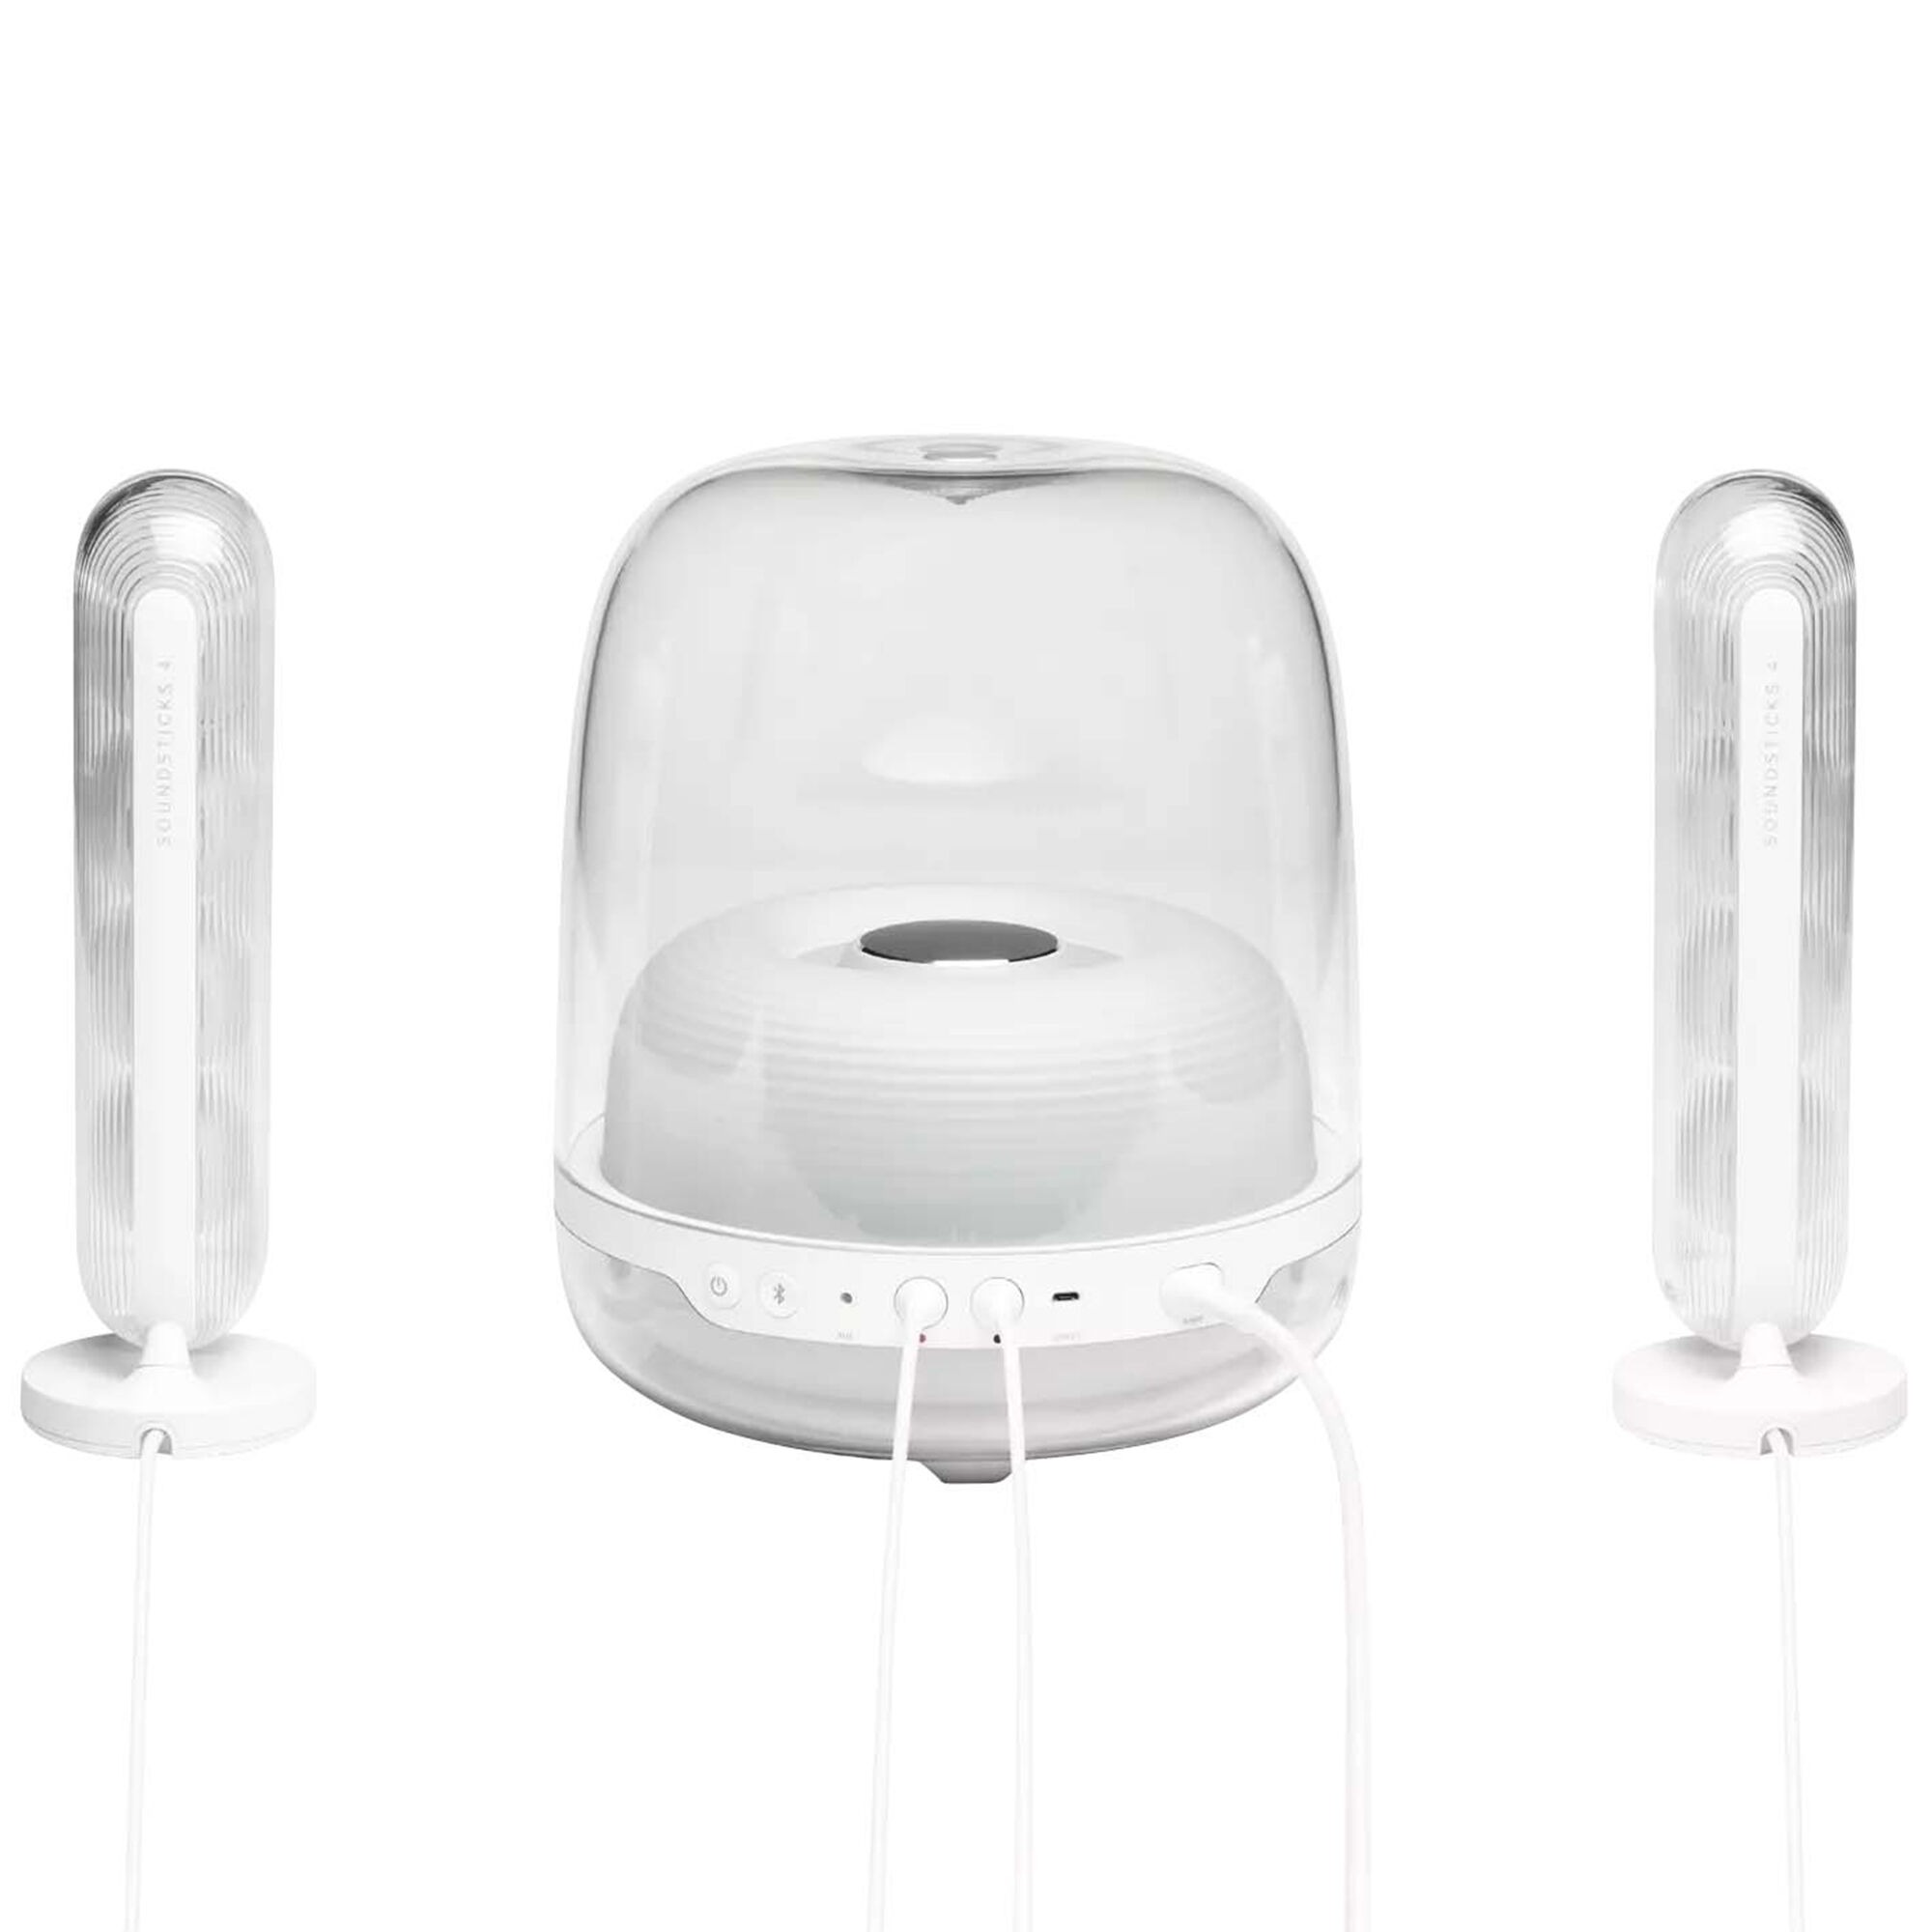 Harman Kardon SoundSticks 4 Bluetooth Speaker System - White